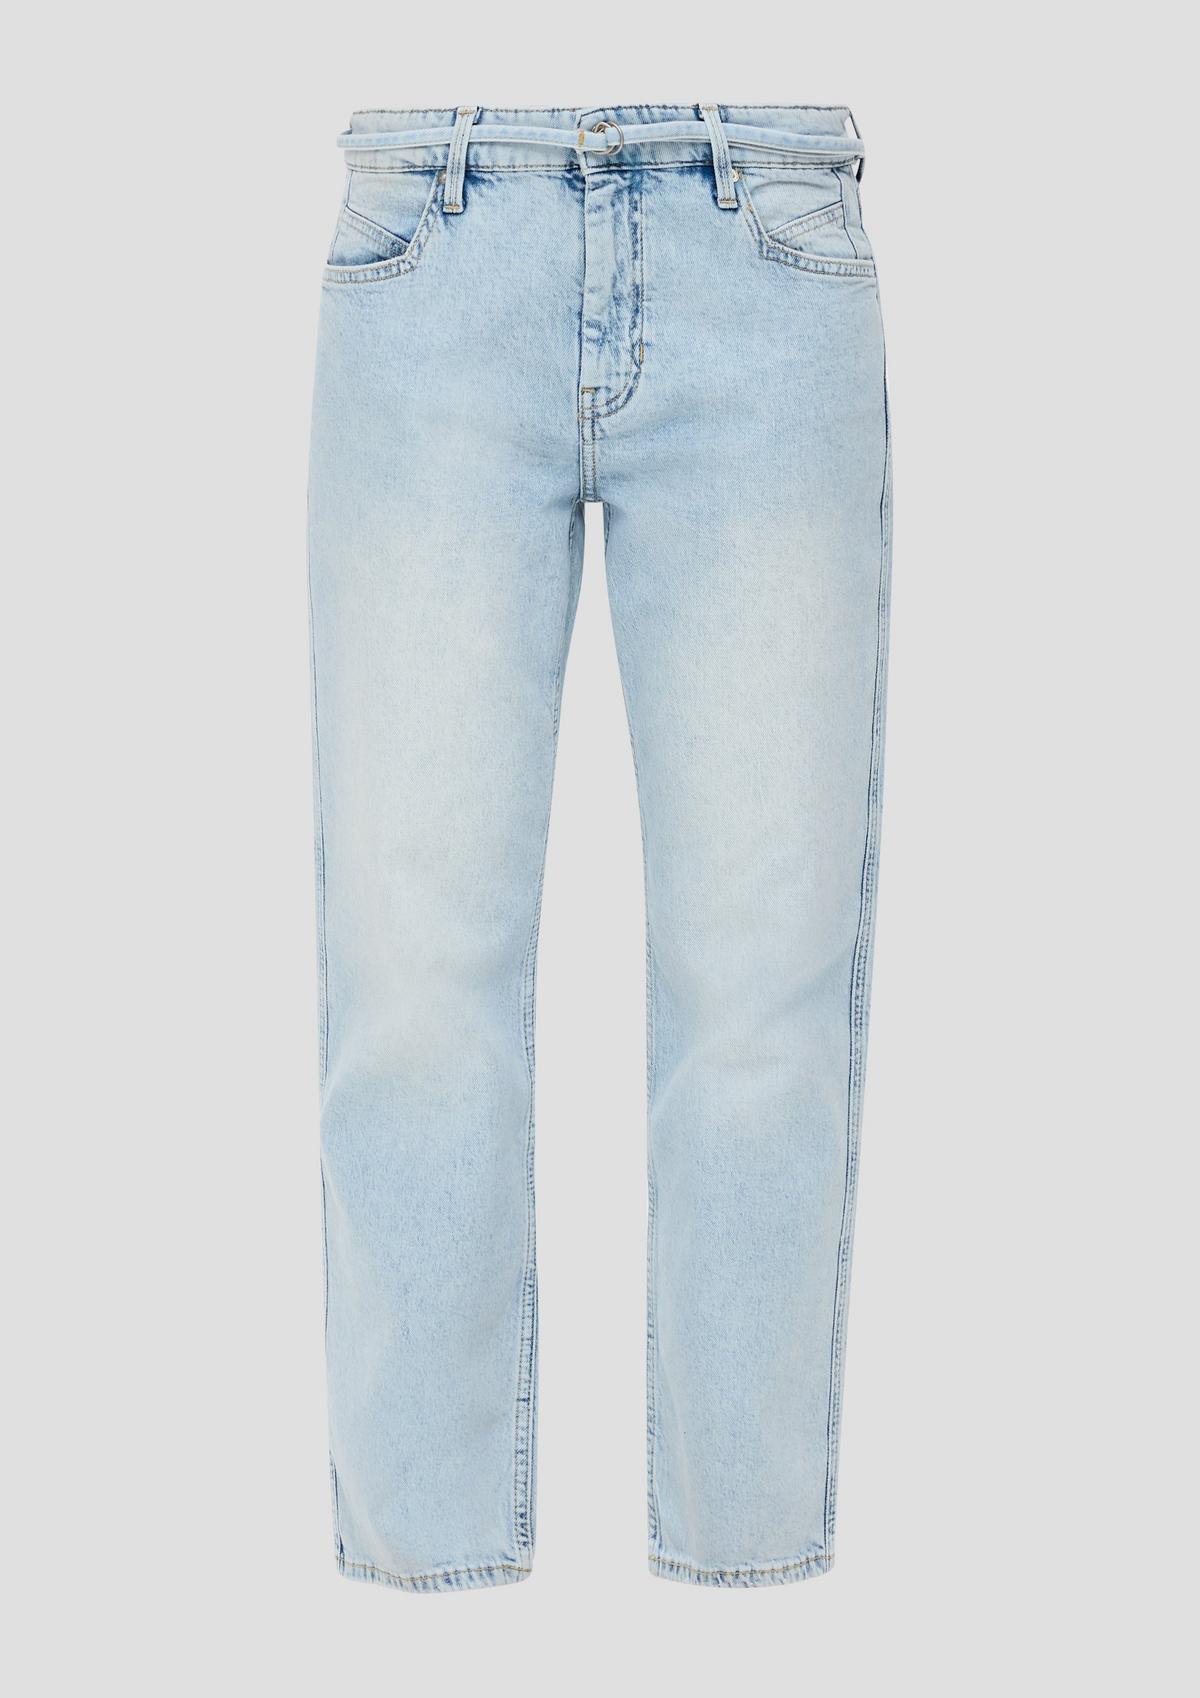 s.Oliver Karolin cropped jeans / regular fit / mid rise / straight leg